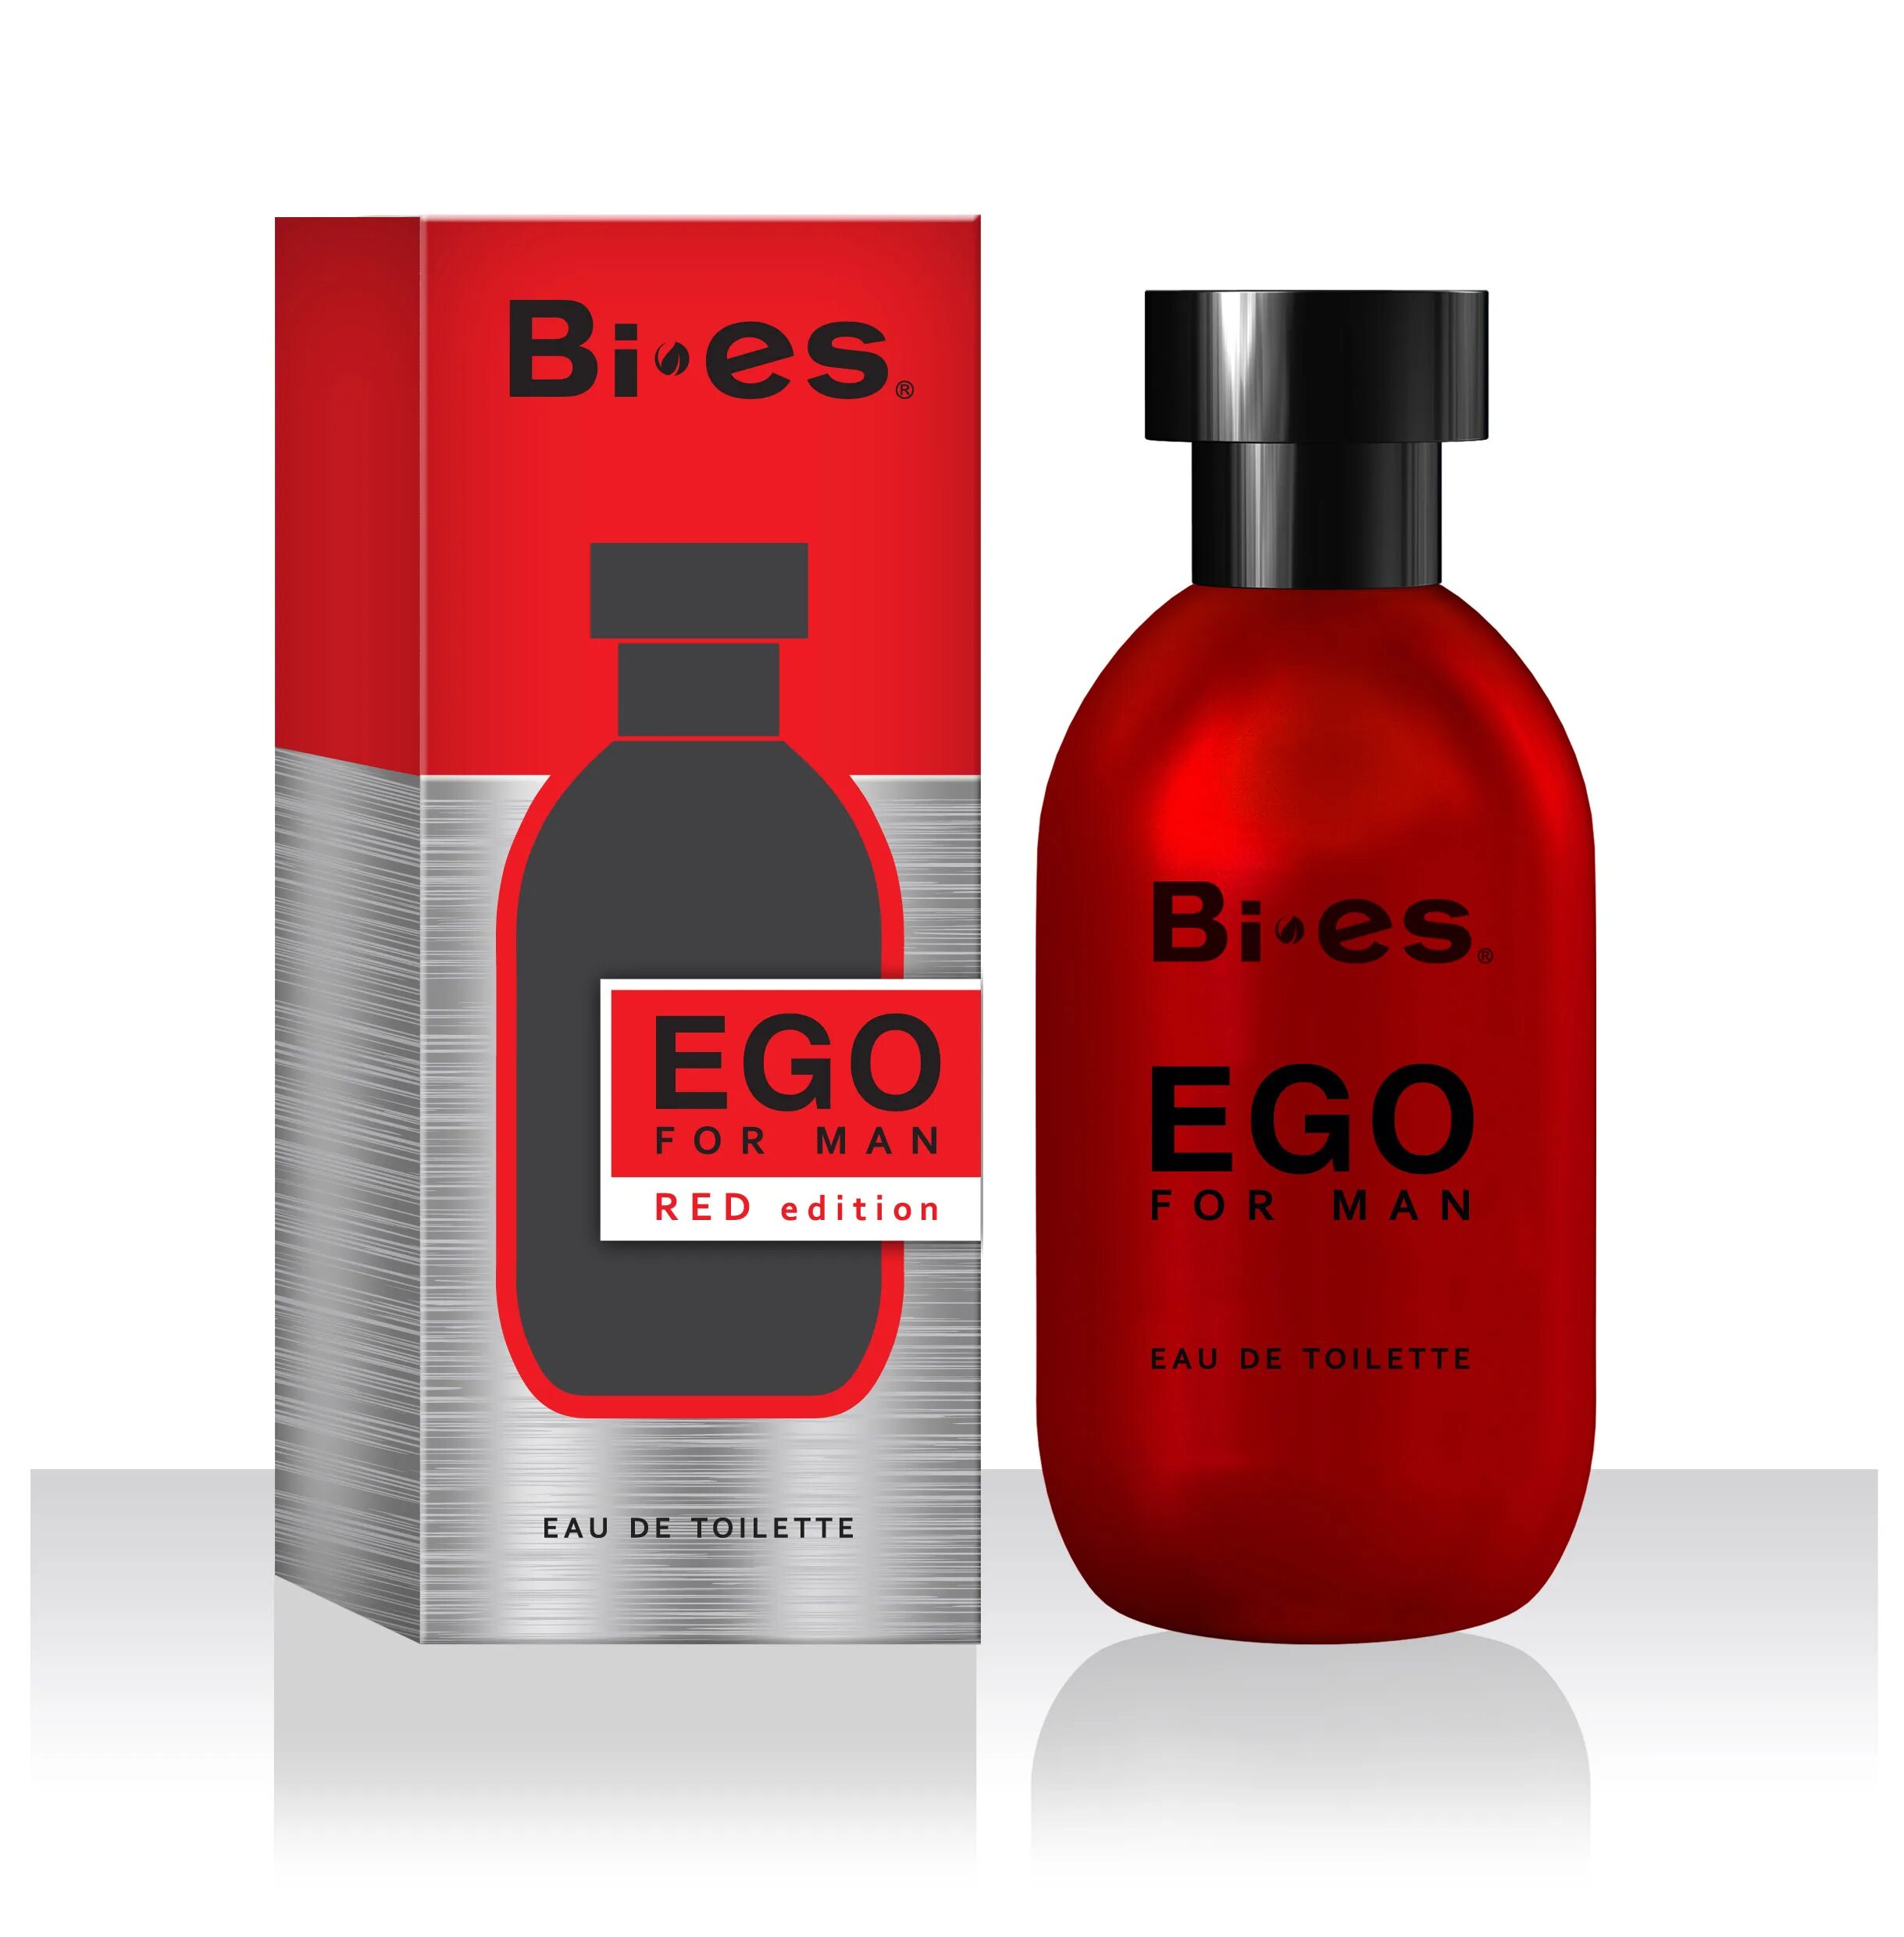 Bi es туалетная вода Red. Hugo Boss Red men 100ml. Bi-es ТВ Д/М 100мл Ego Red (Hugo Boss Red) 2431. Bi-es тестер туалетная вода для мужчин Ego Red 100 мл.